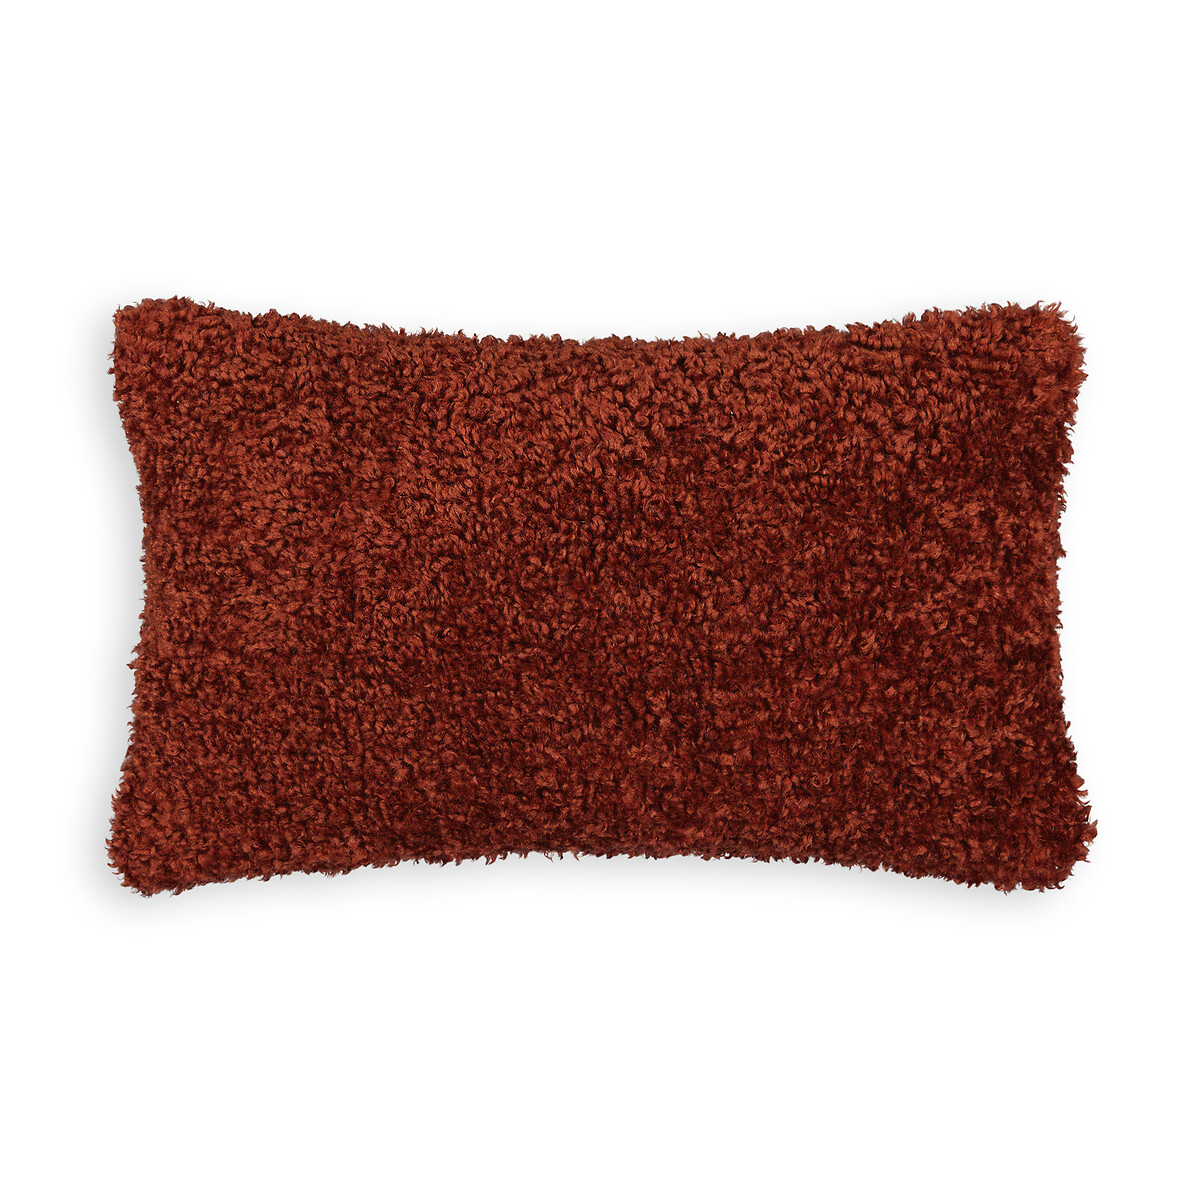 Чехол LA REDOUTE INTERIEURS Чехол На подушку из искусственного меха Ouate 40 x 40 см каштановый, размер 40 x 40 см - фото 3